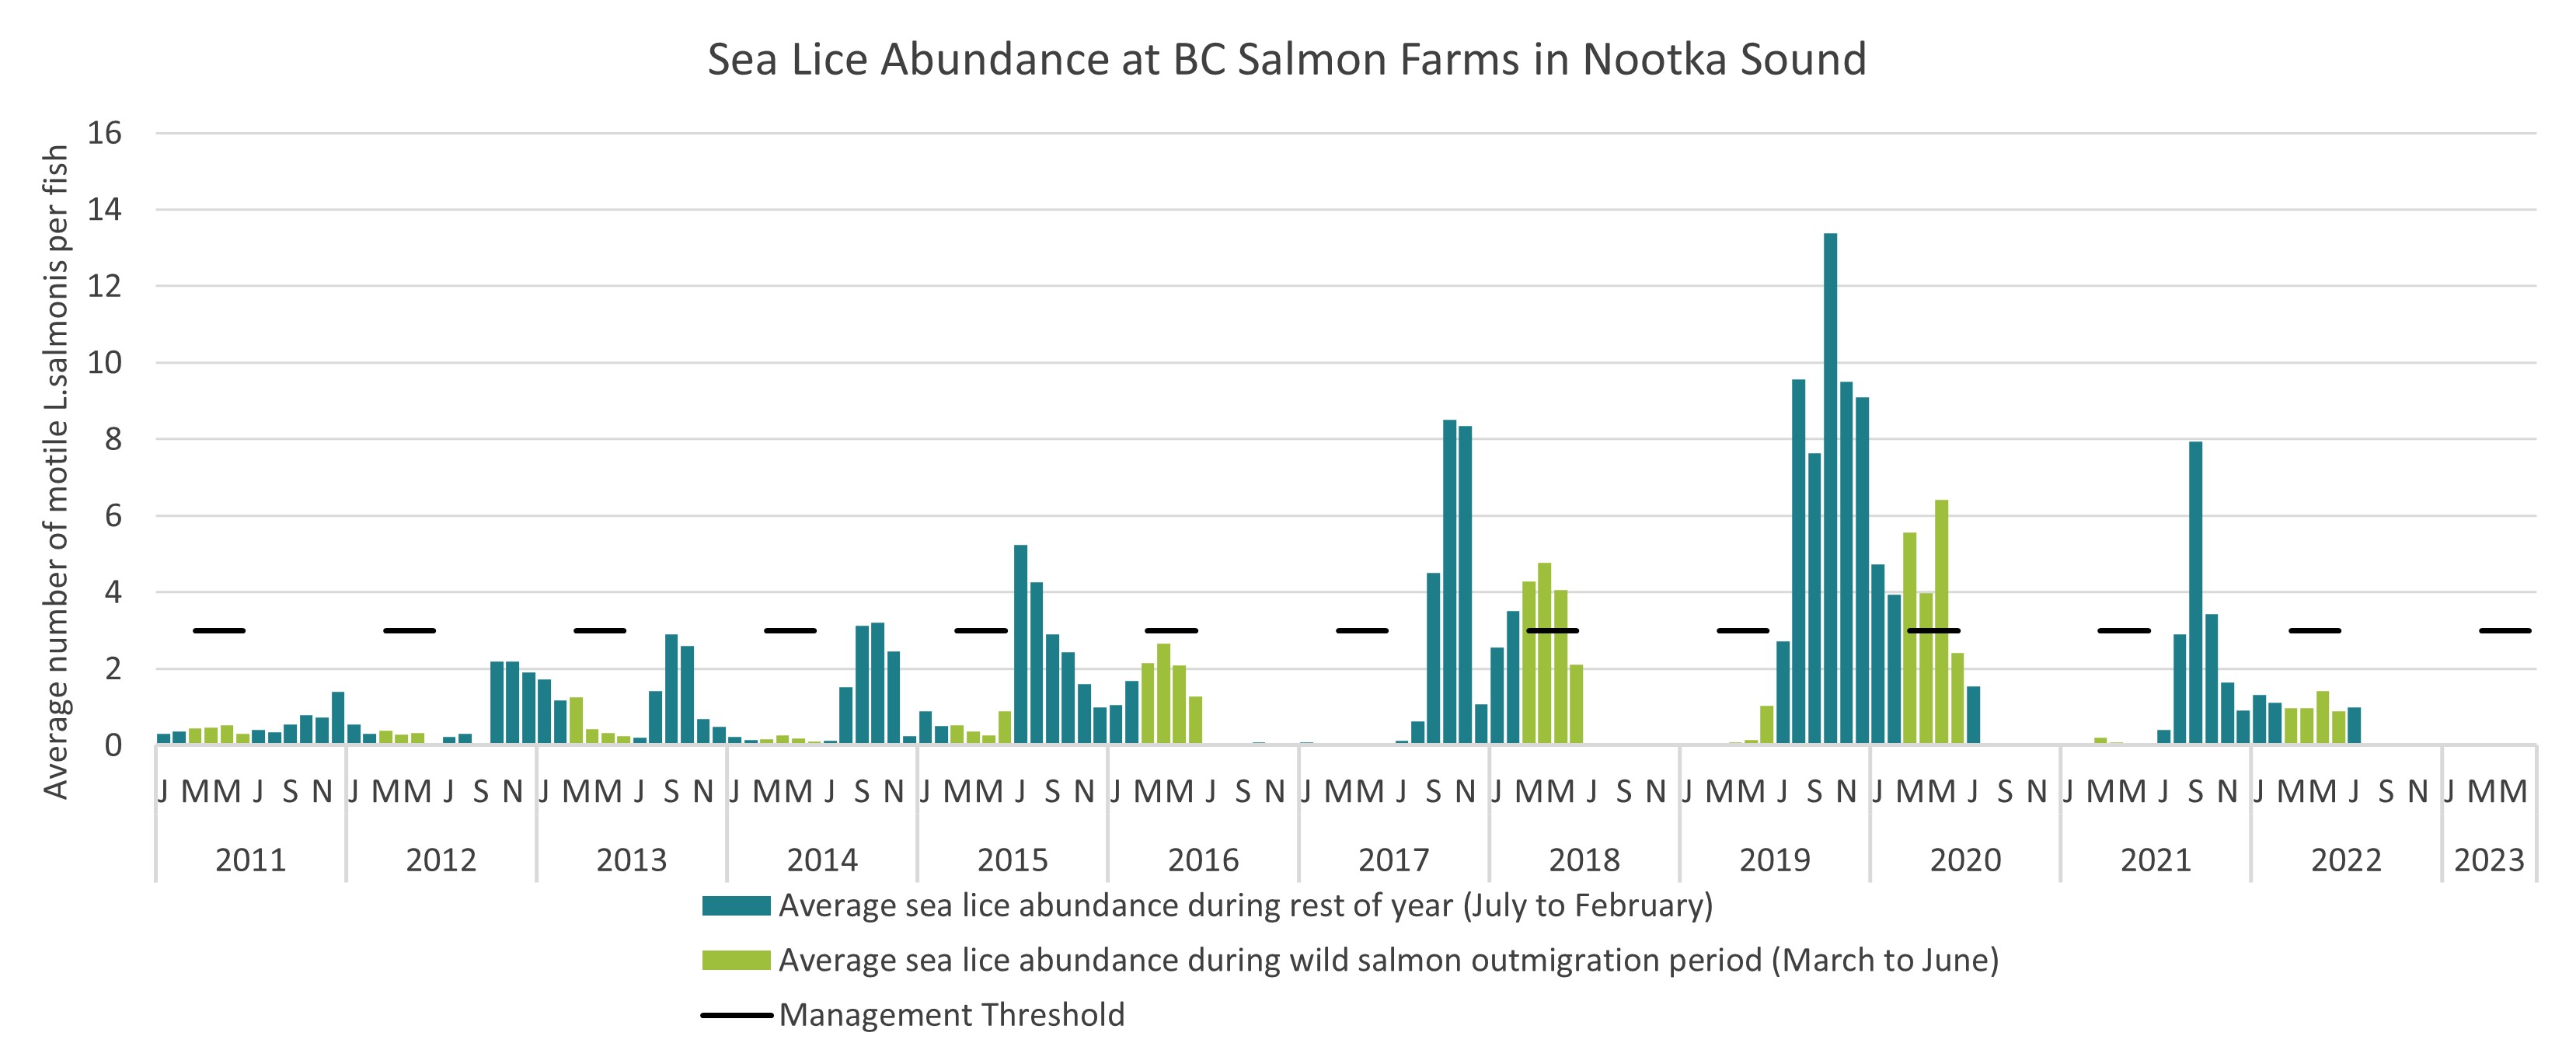 Sea Lice Abundance at BC Salmon Farms in the Nootka Sound area, 2011 to 2023